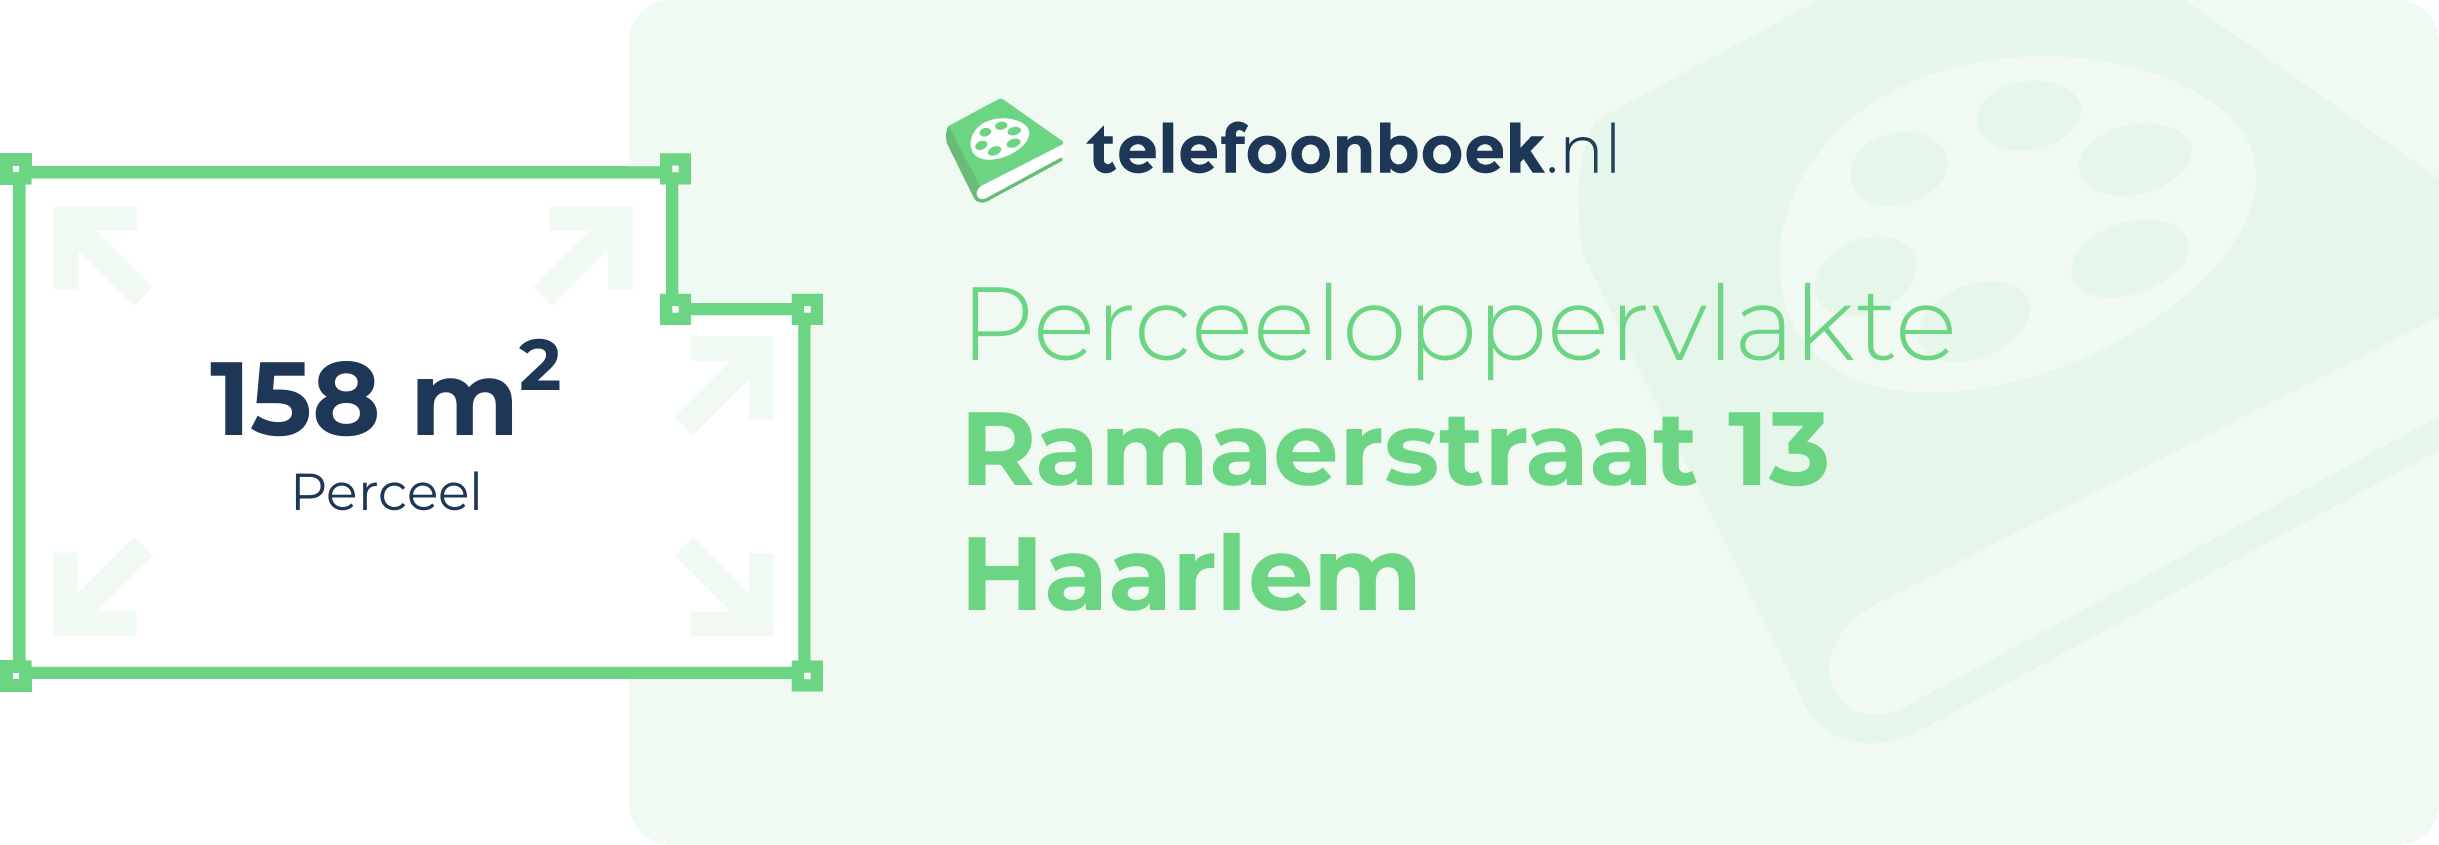 Perceeloppervlakte Ramaerstraat 13 Haarlem